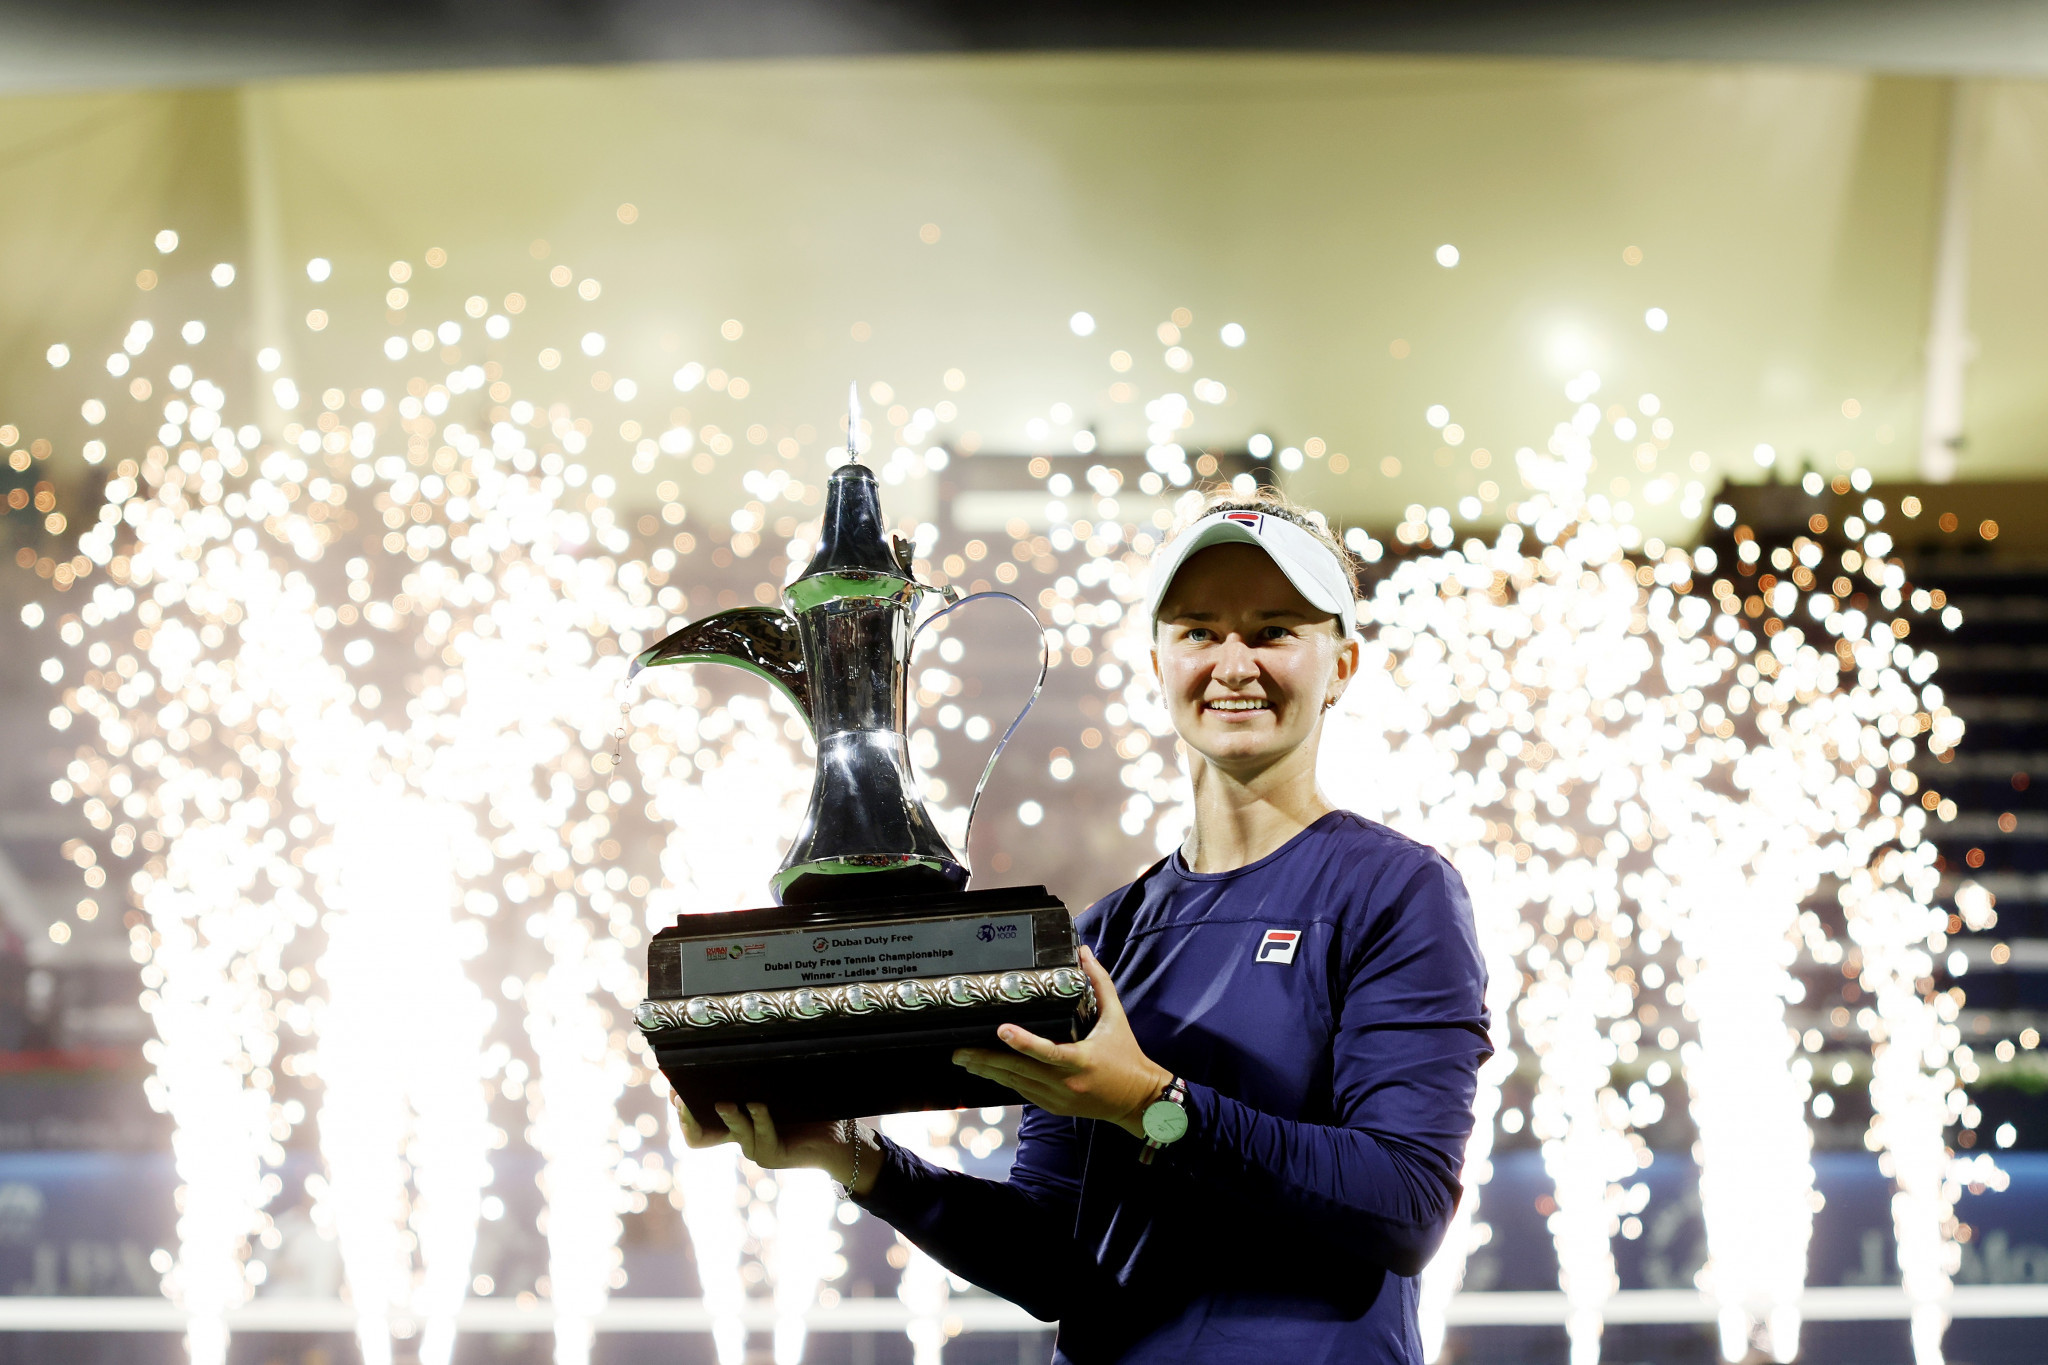 Krejčíková stuns Świątek to win WTA Dubai Tennis Championships crown